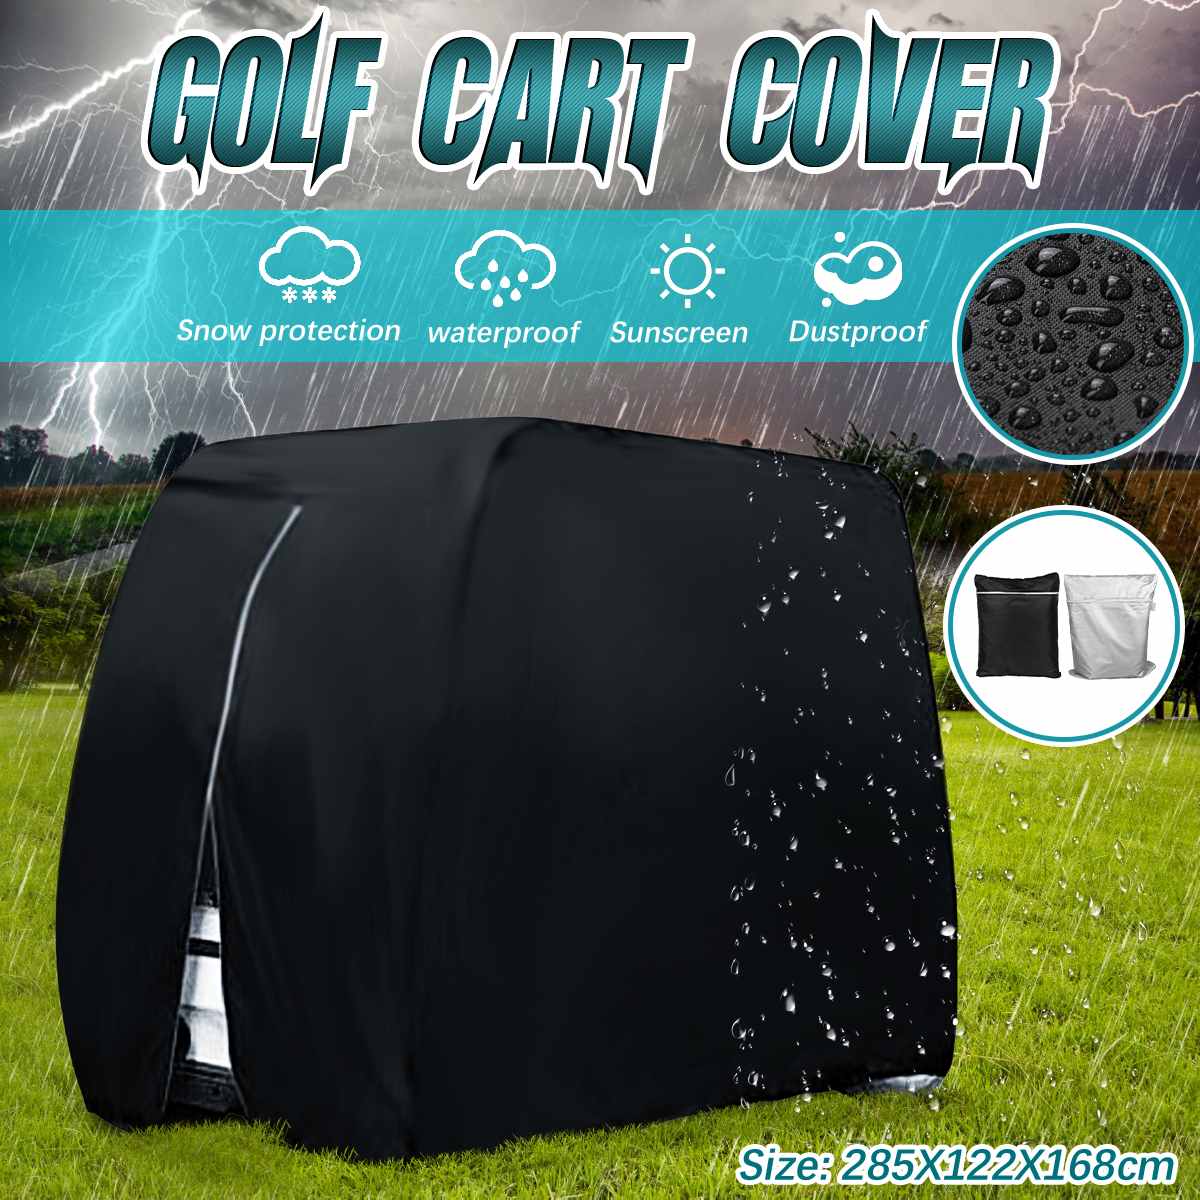 285*122*168cm Waterproof Oxford Cloth Golf Car Cart Cover Sunshade Dustproof For EZ Go Club